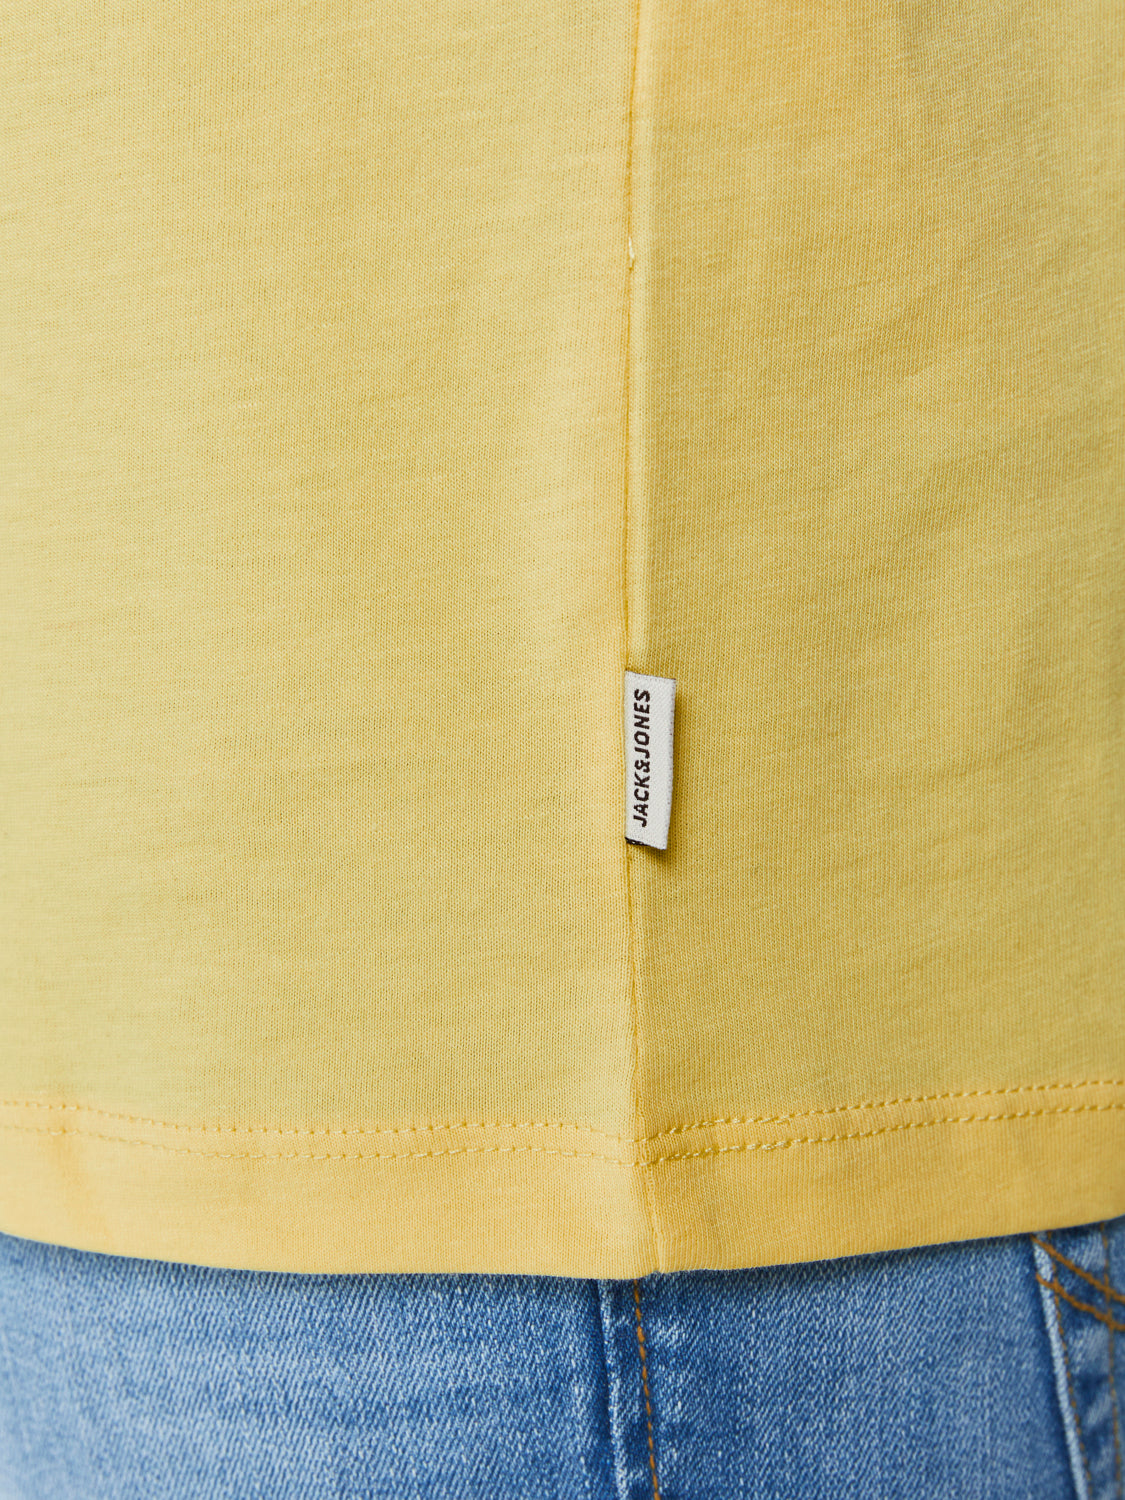 JJEORGANIC T-Shirt - Mellow Yellow